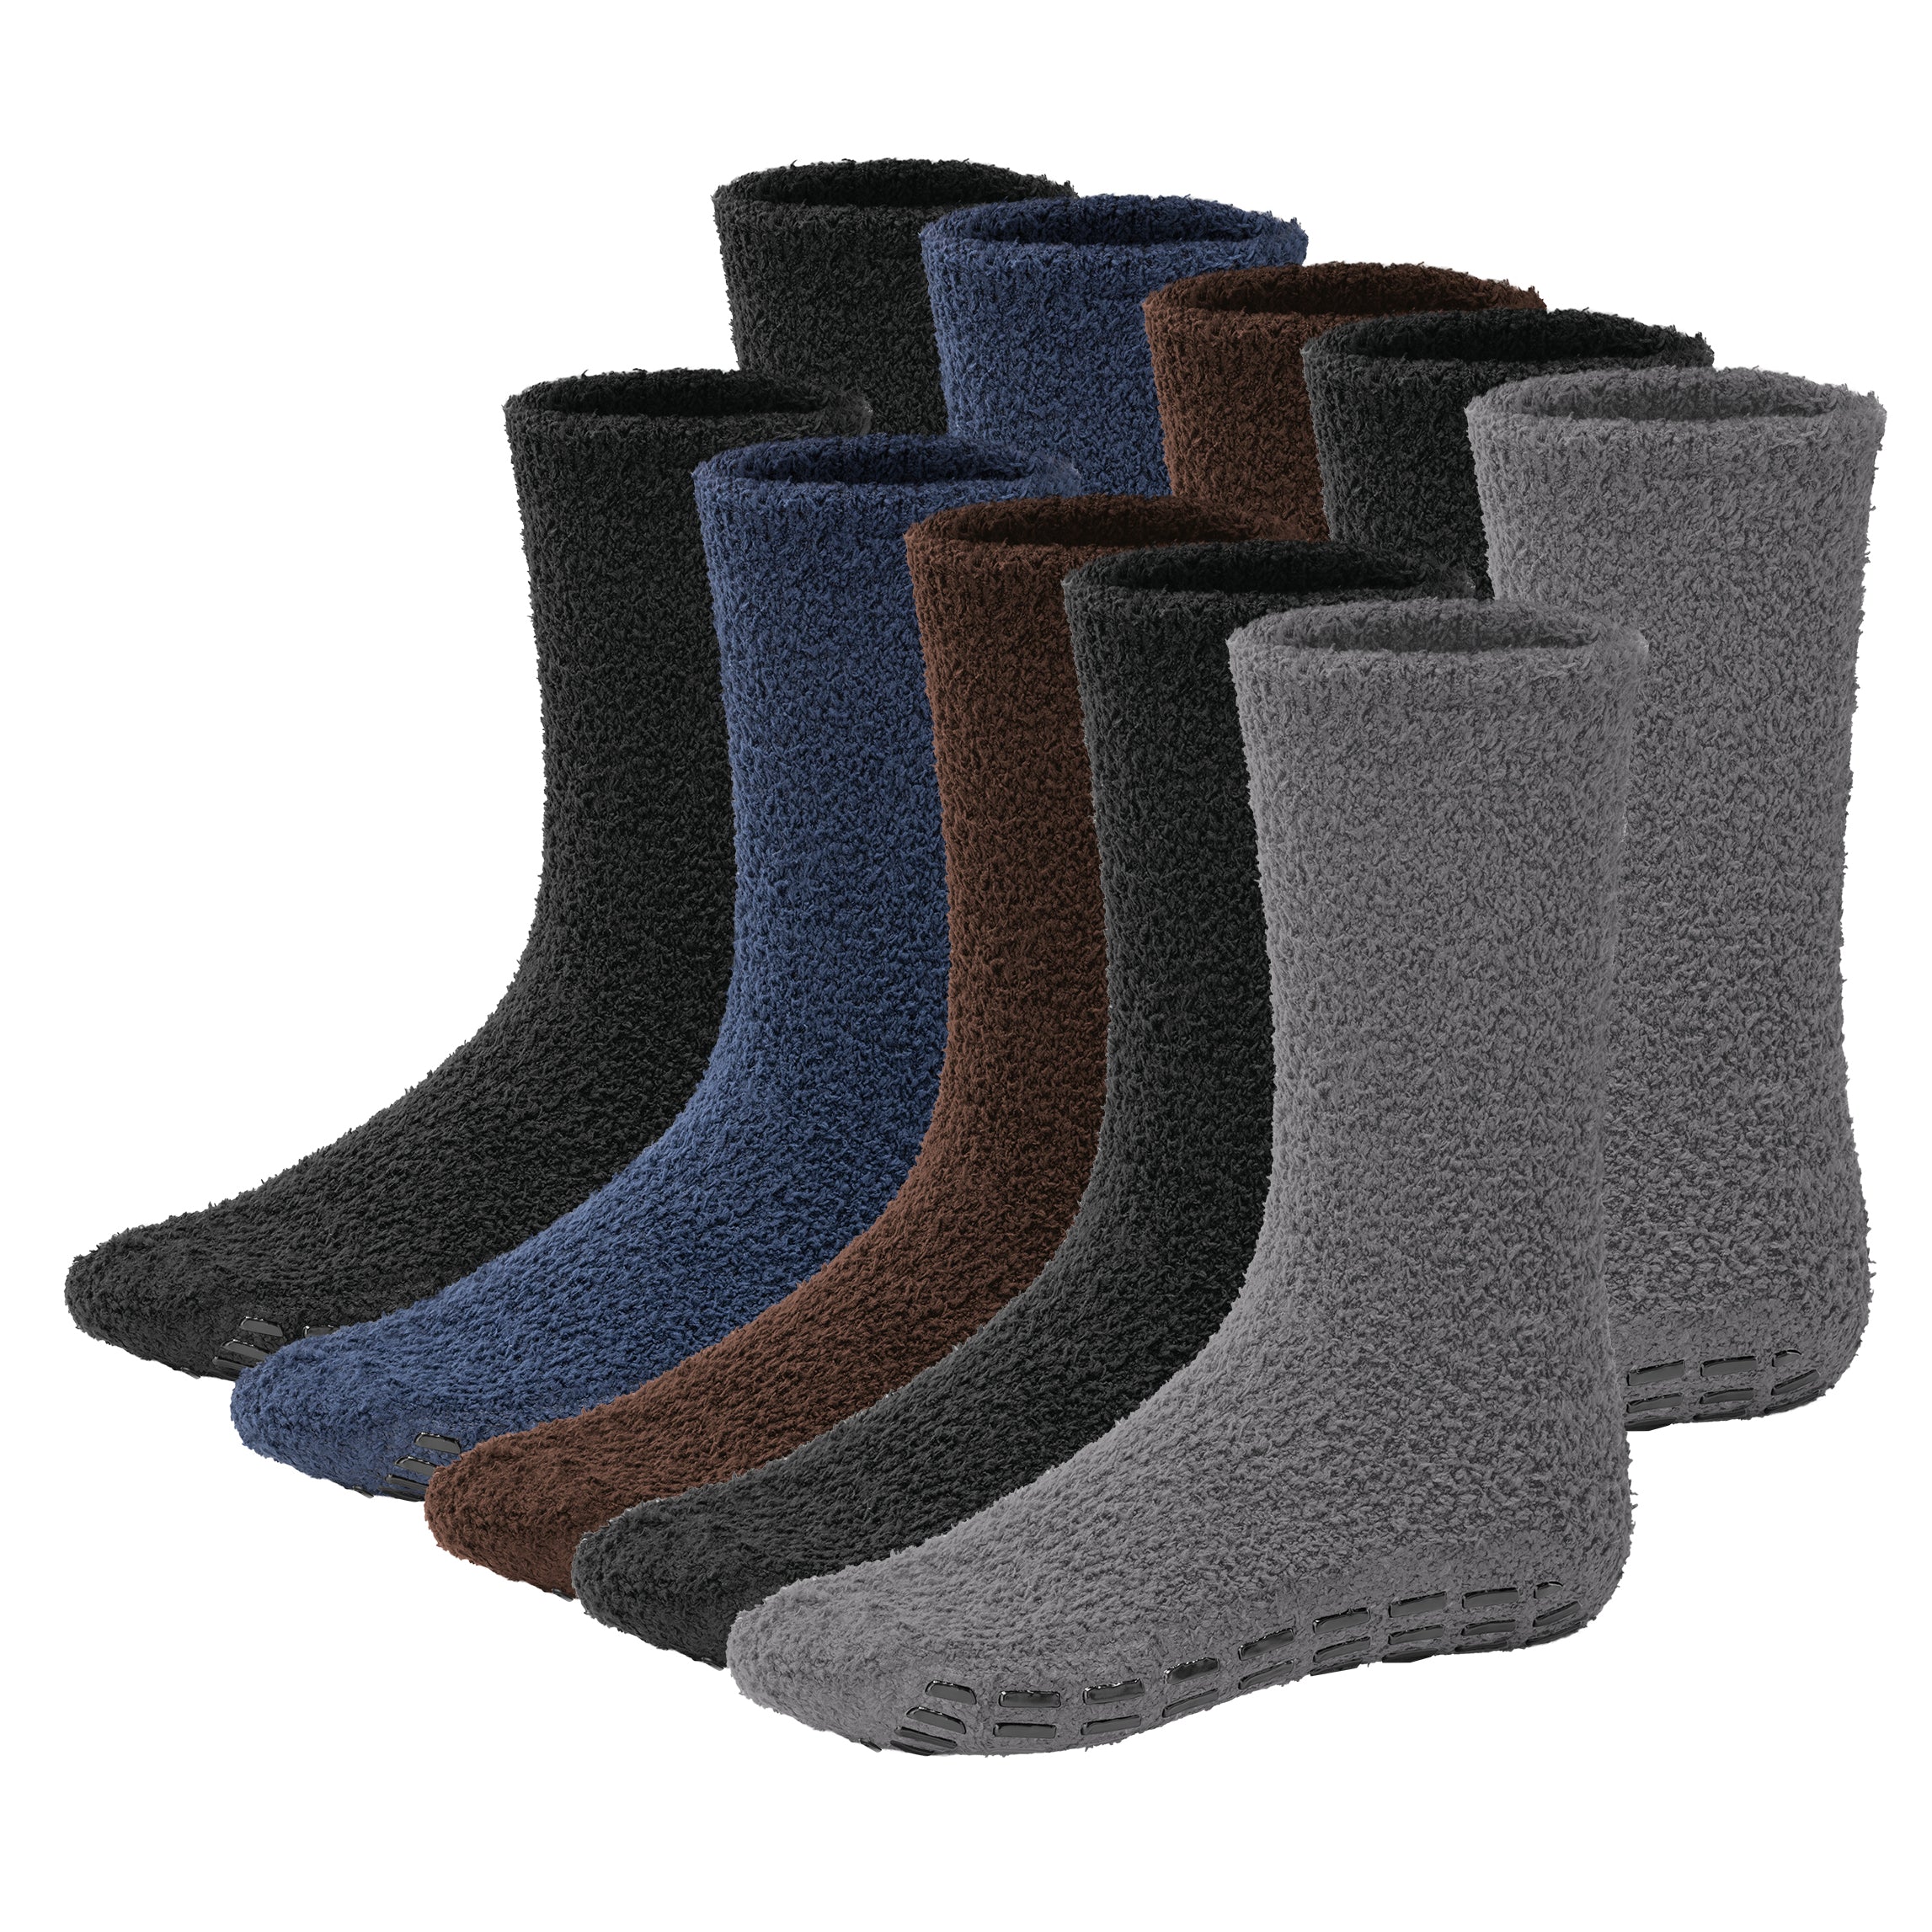 Fuzzy Men's Socks - 5 Pairs – Debra Weitzner